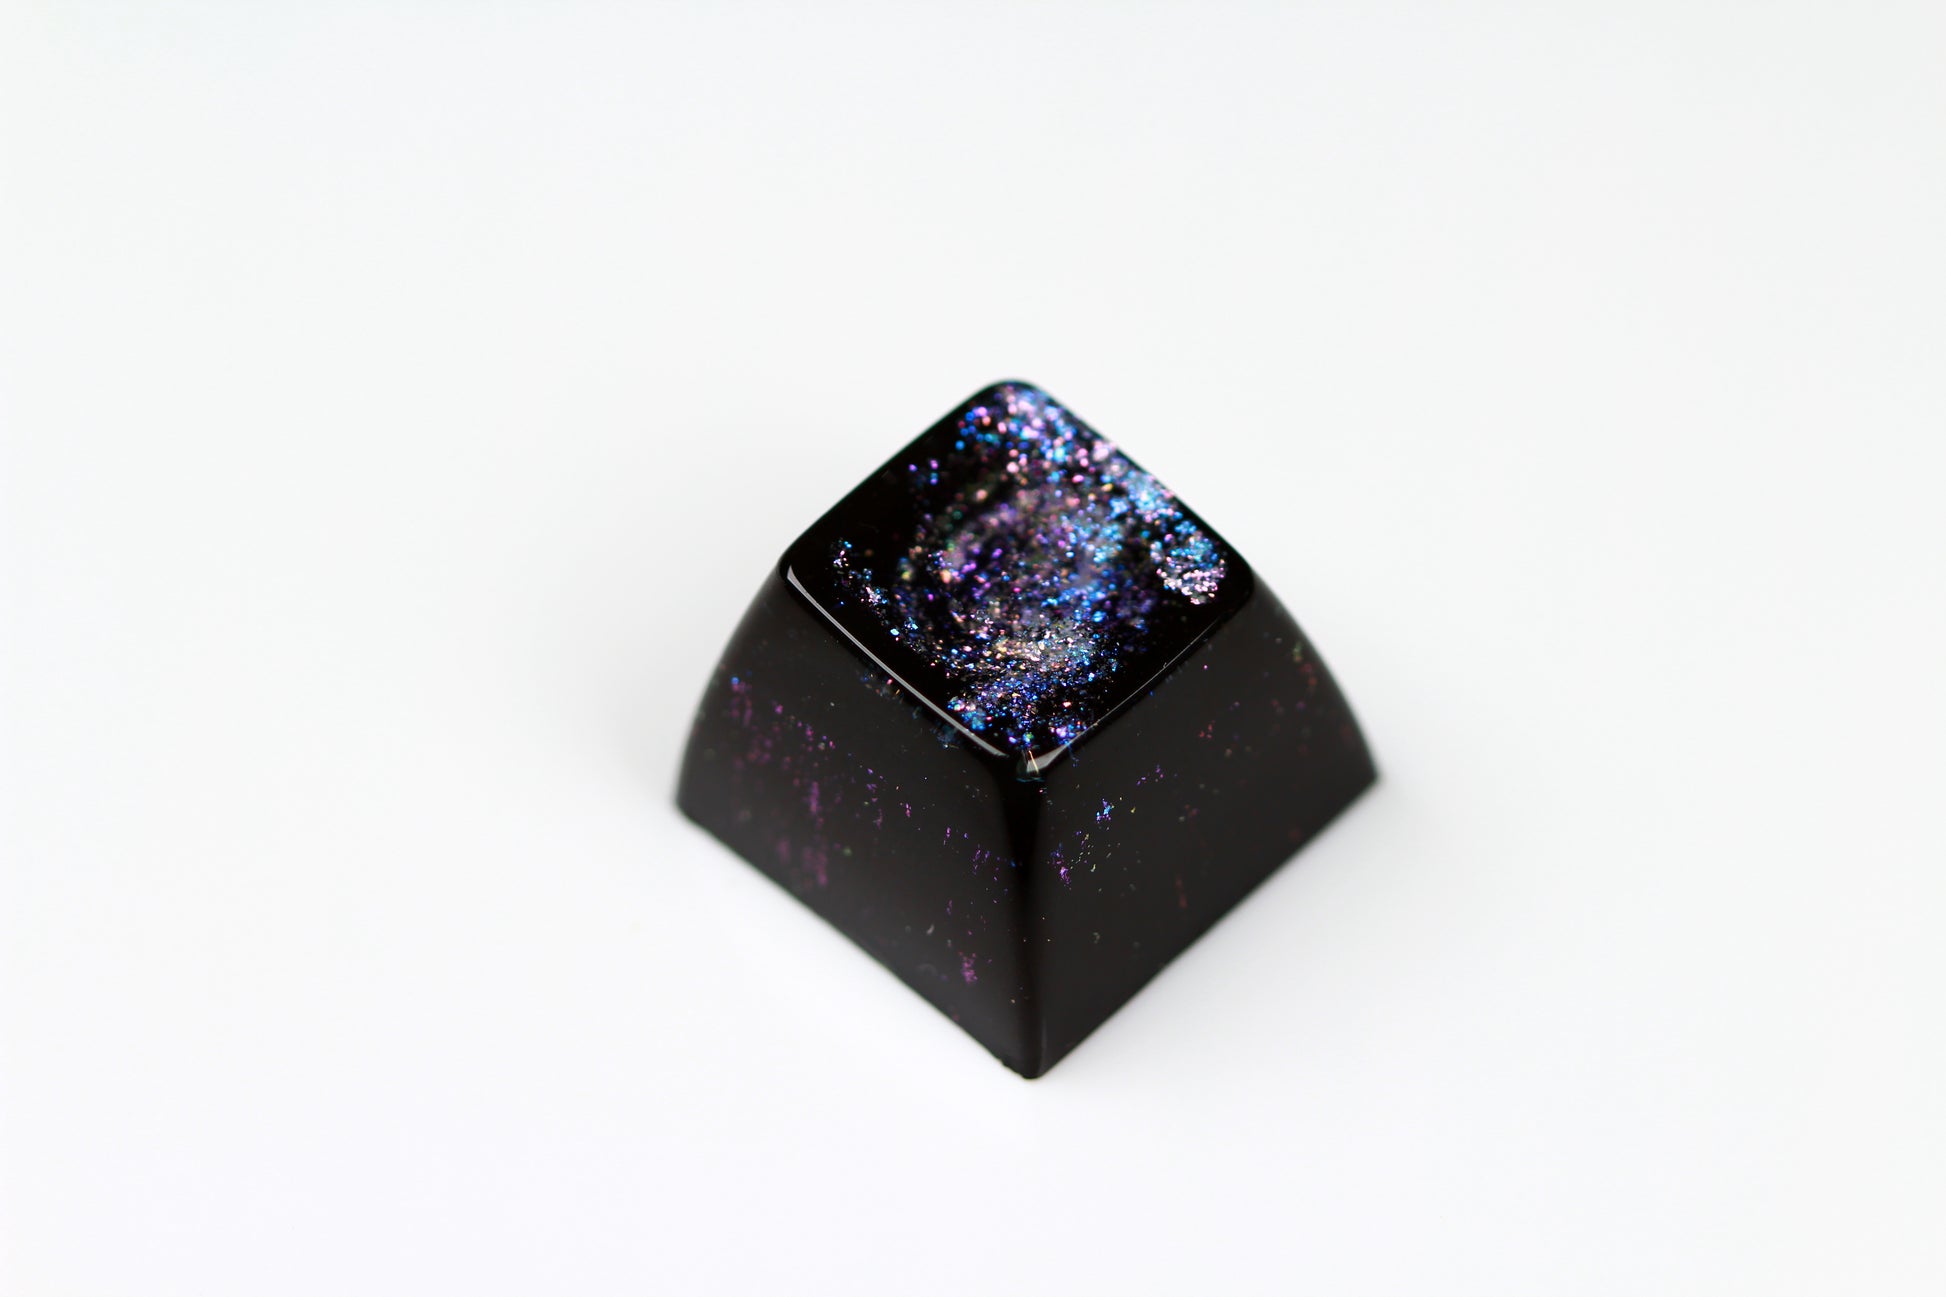 Gimpy SA Row 2/4 - Deep Field Opal Nebula 13 - PrimeCaps Keycap - Blank and Sculpted Artisan Keycaps for cherry MX mechanical keyboards 